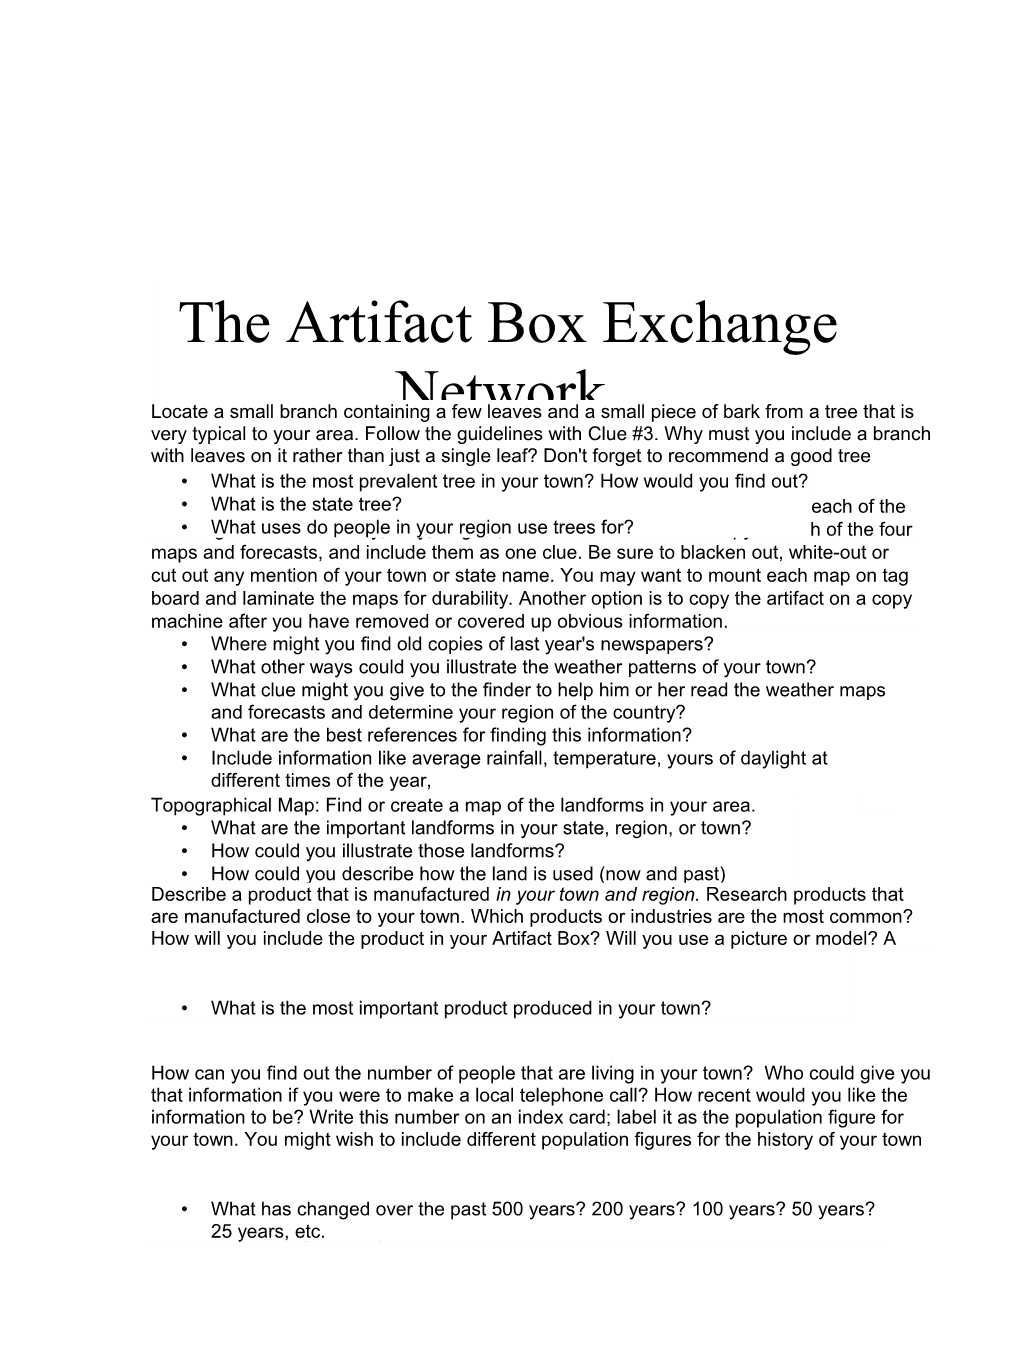 The Artifact Box Exchange Network